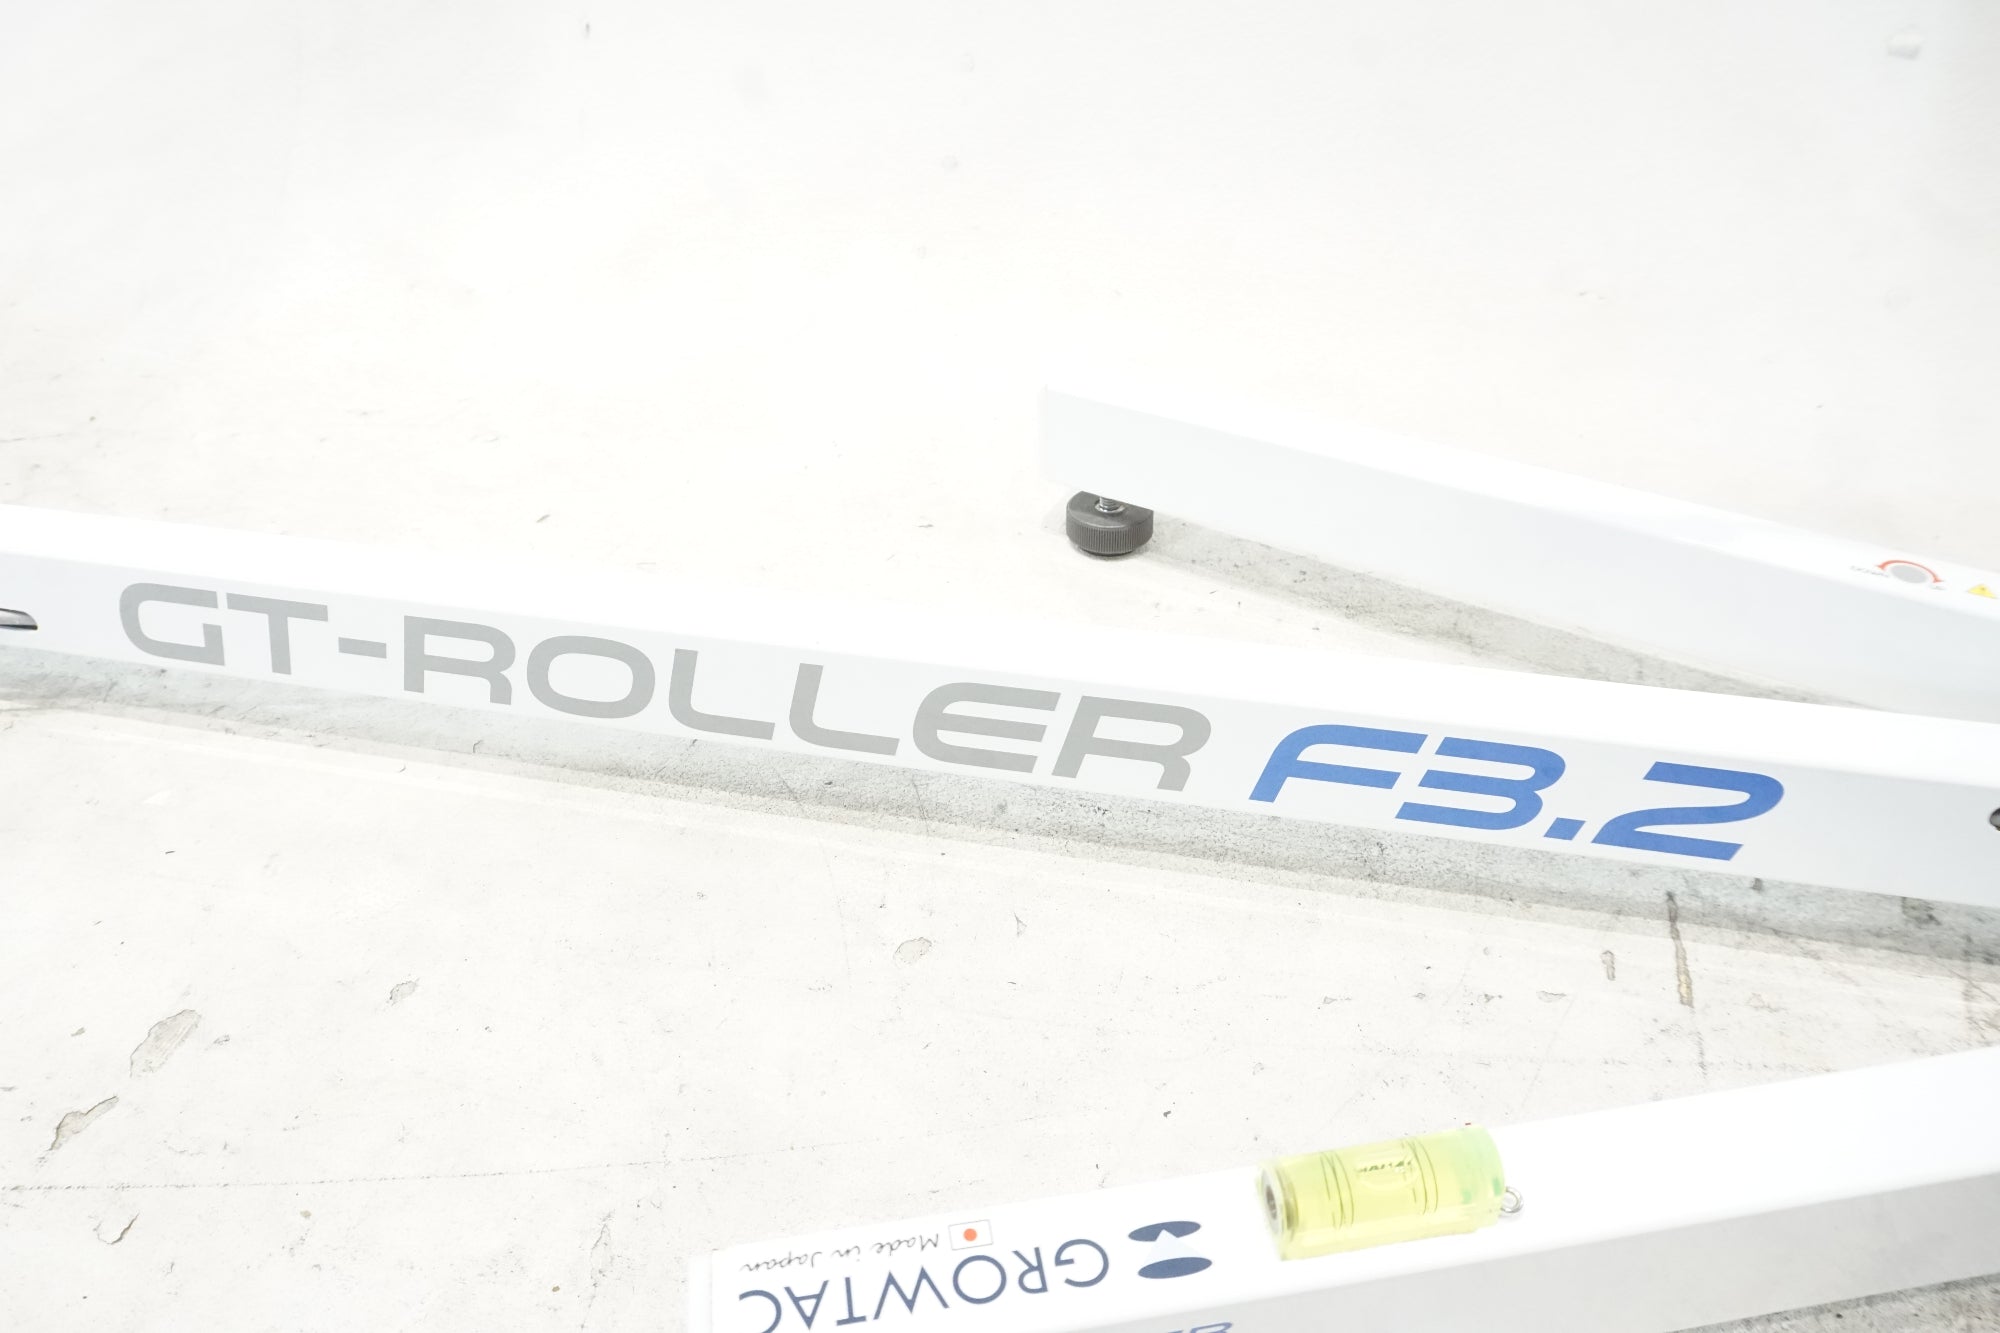 GROWTEC 「グロータック」 GT-ROLLER F3.2 サイクルトレーナー / 横浜戸塚店